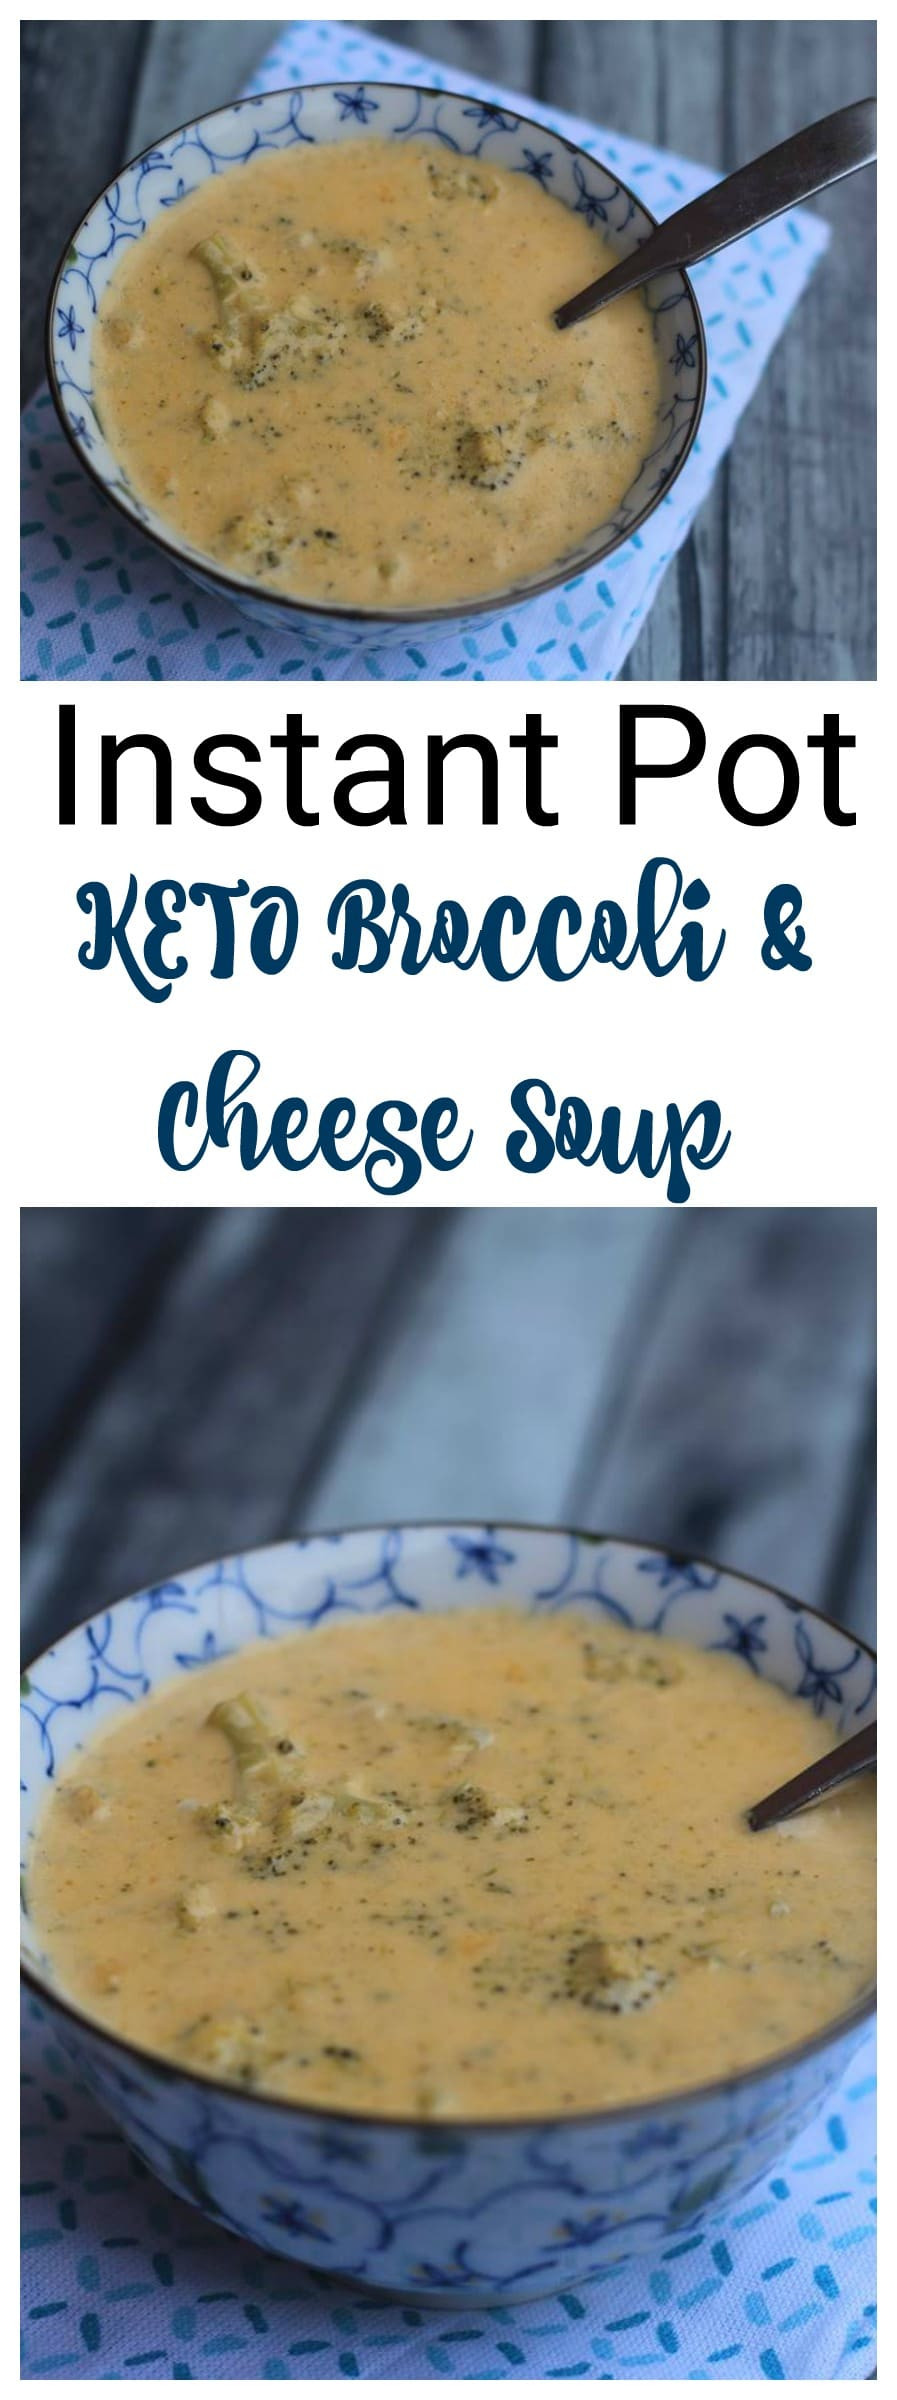 Instapot Keto Broccoli Cheese Soup
 Instant Pot Broccoli & Cheese Soup Recipe Keto Low Carb